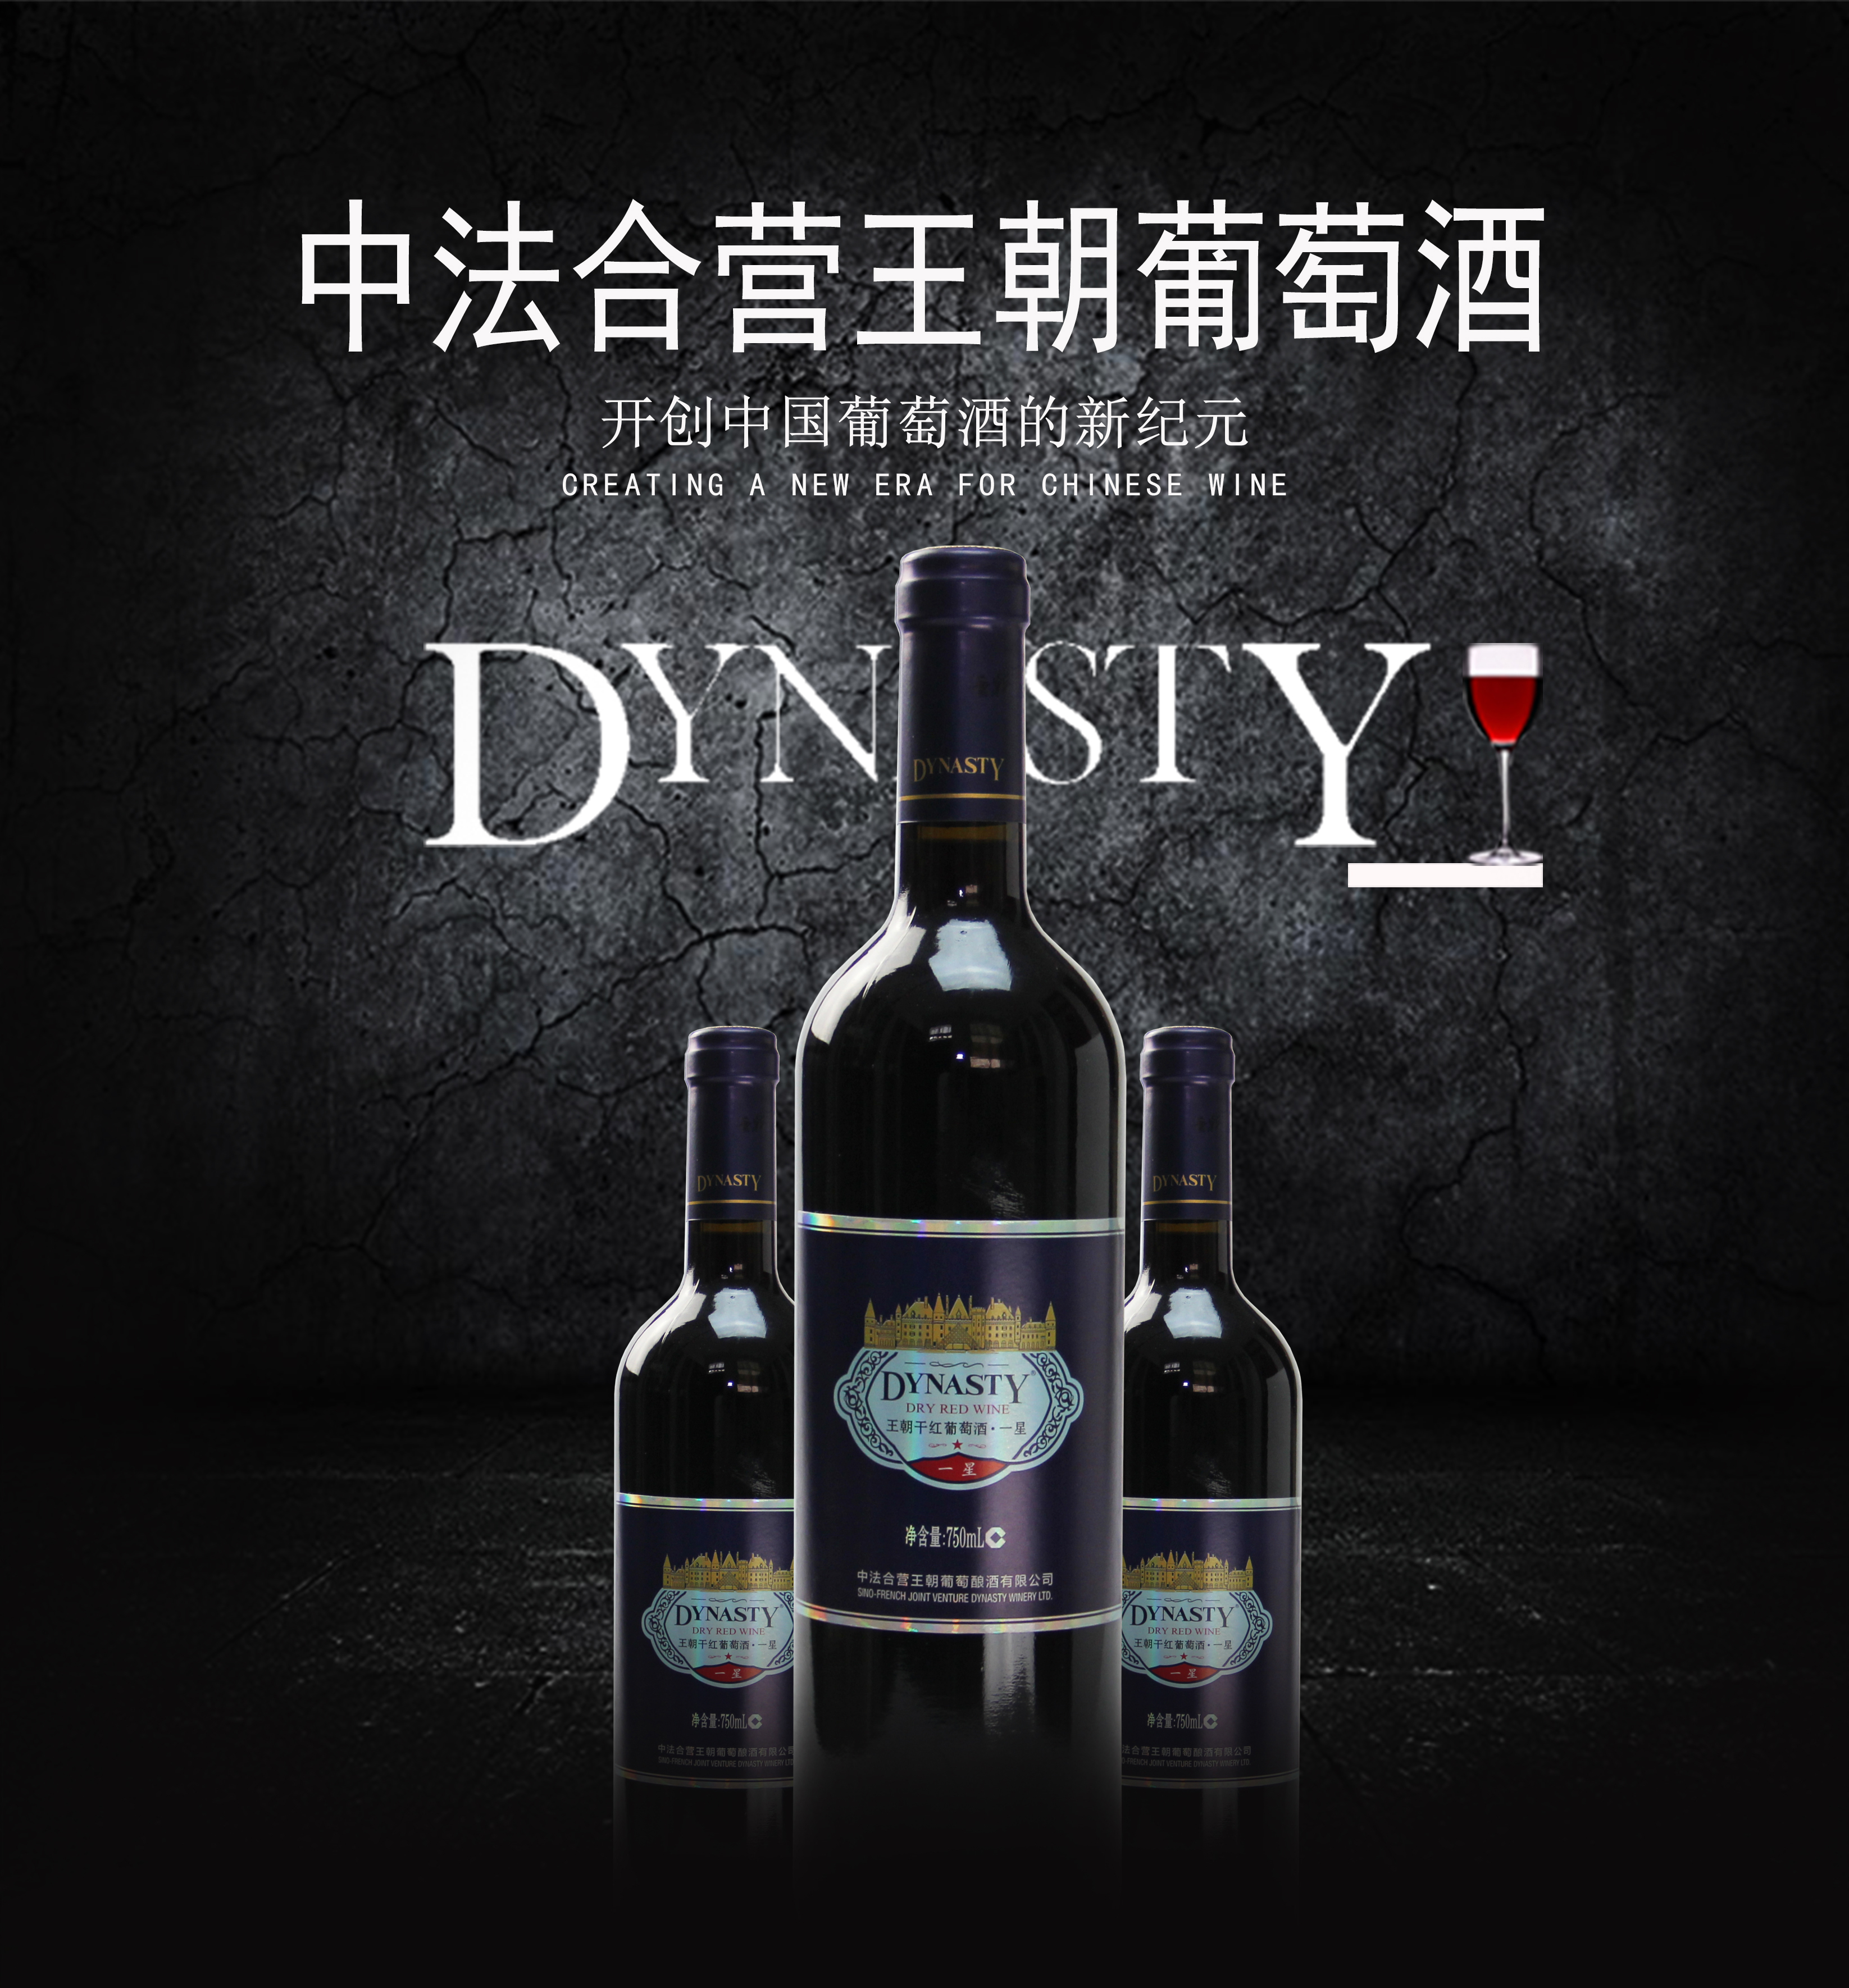 Dynasty王朝一星国产干红葡萄酒(图1)